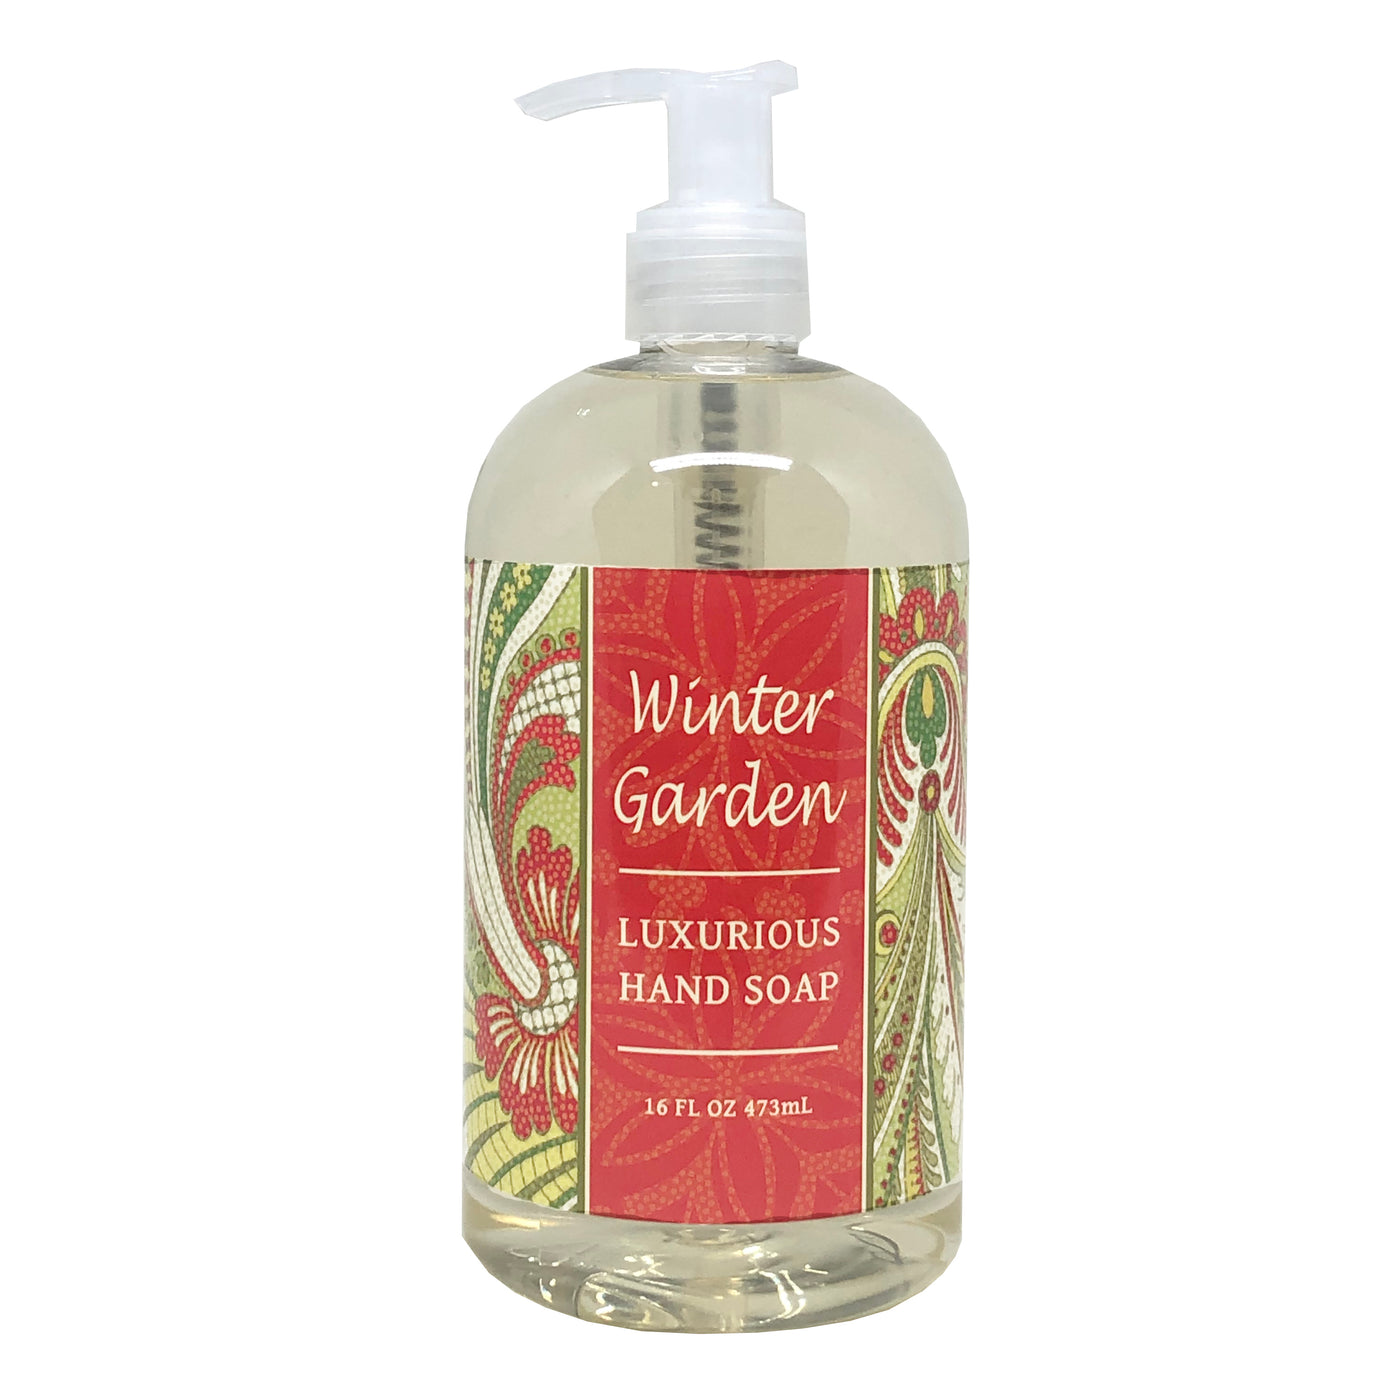 Winter Garden Hand Soap